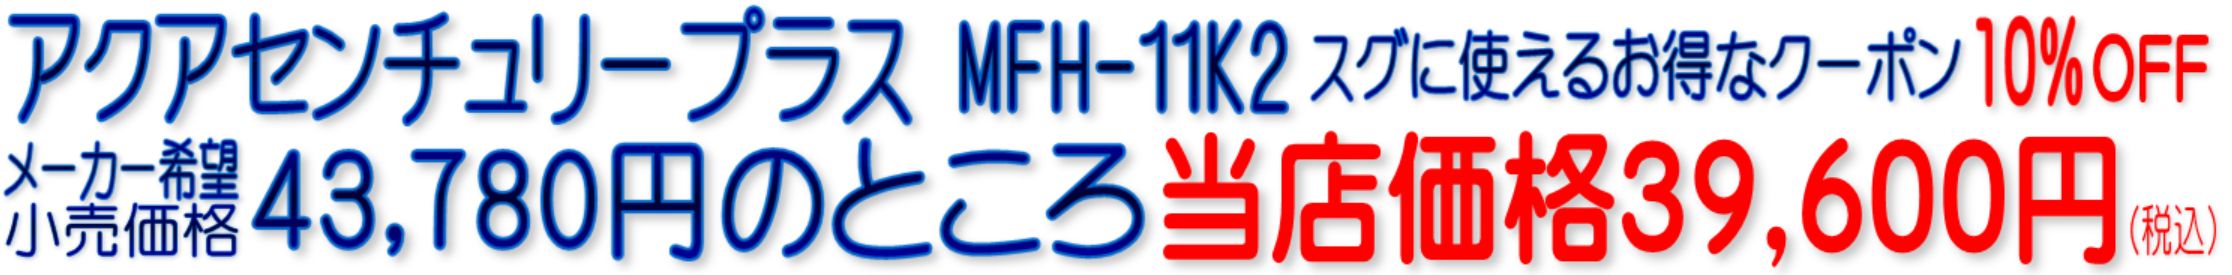 MFH-11K2 C-MFH-11K2 アクアセンチュリープラス